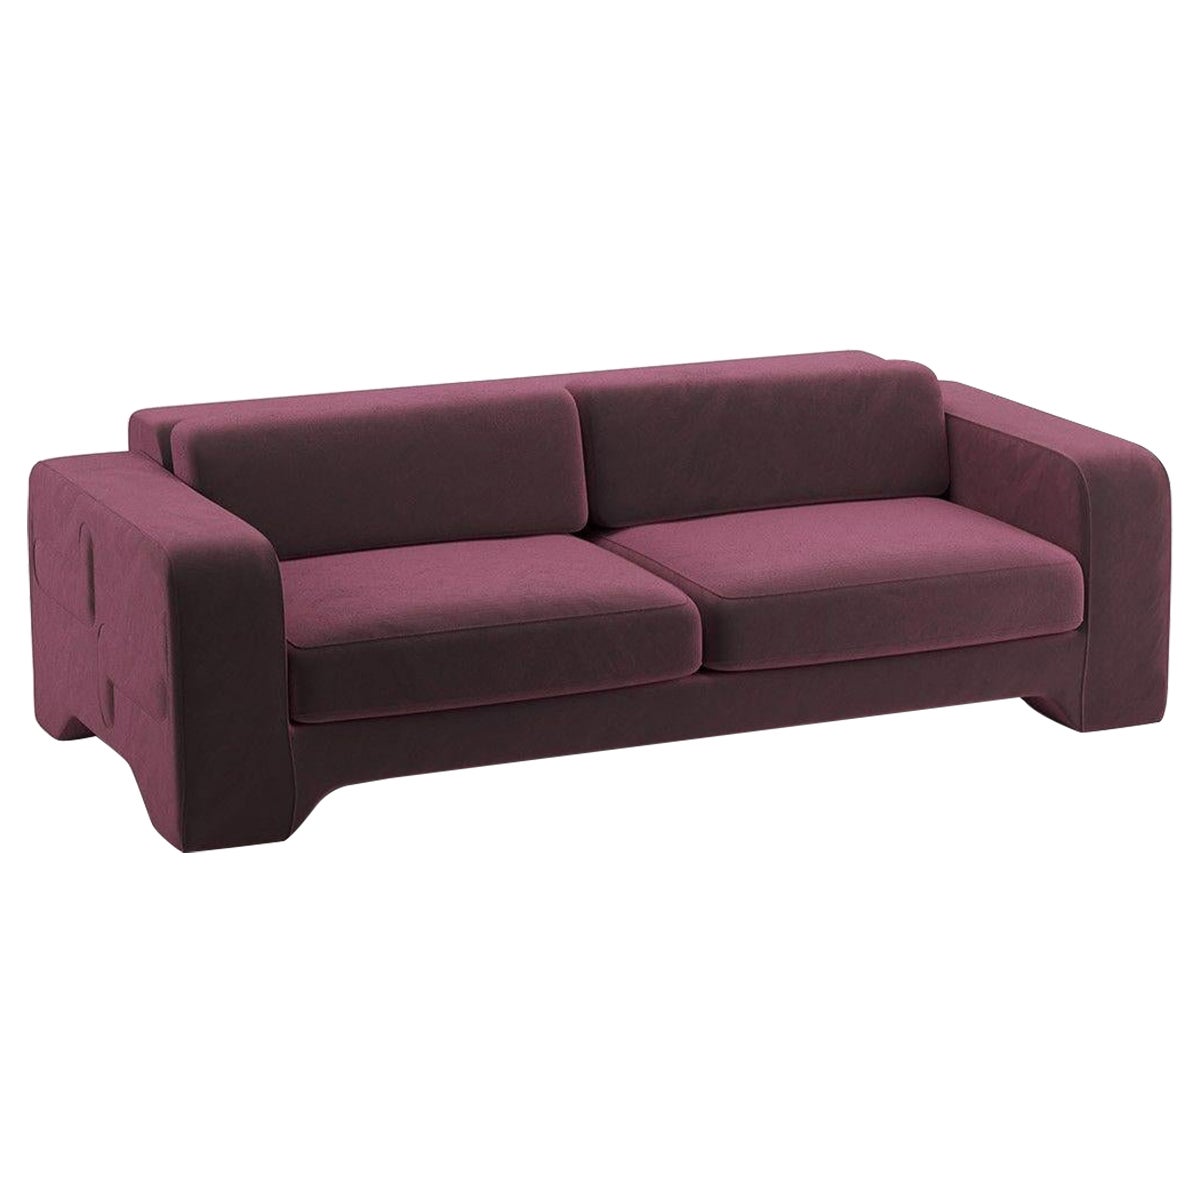 Popus Editions Giovanna 3 Seater Sofa in Bordeaux Burgundy Como Velvet Fabric